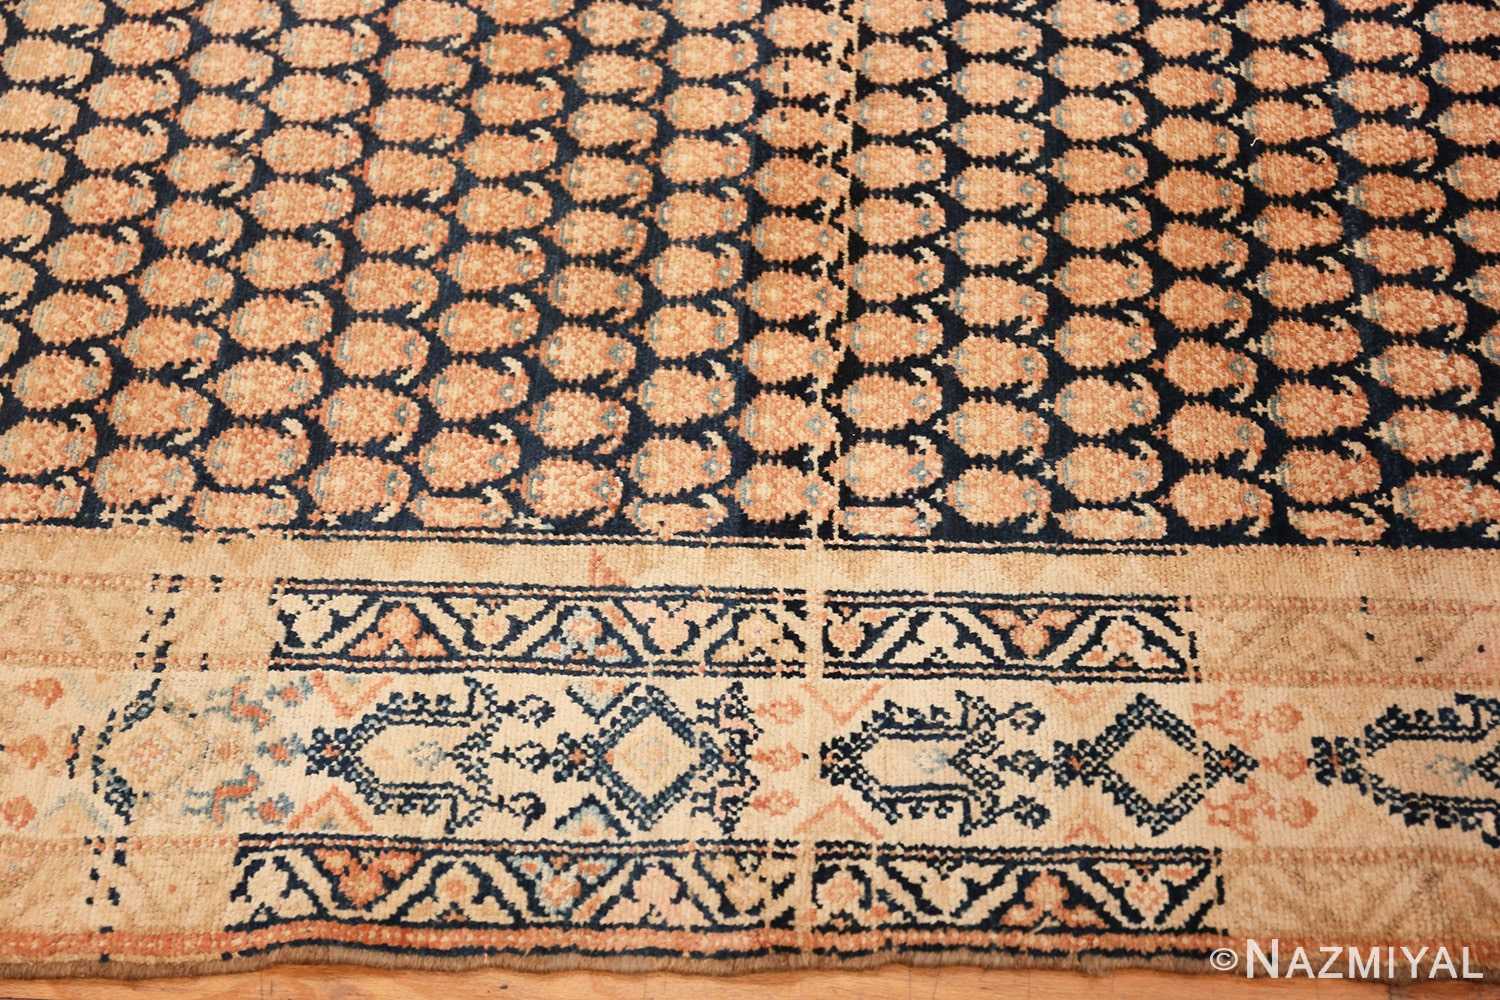 Border Tribal Paisley design Antique Persian Malayer runner rug 50671 by Nazmiyal